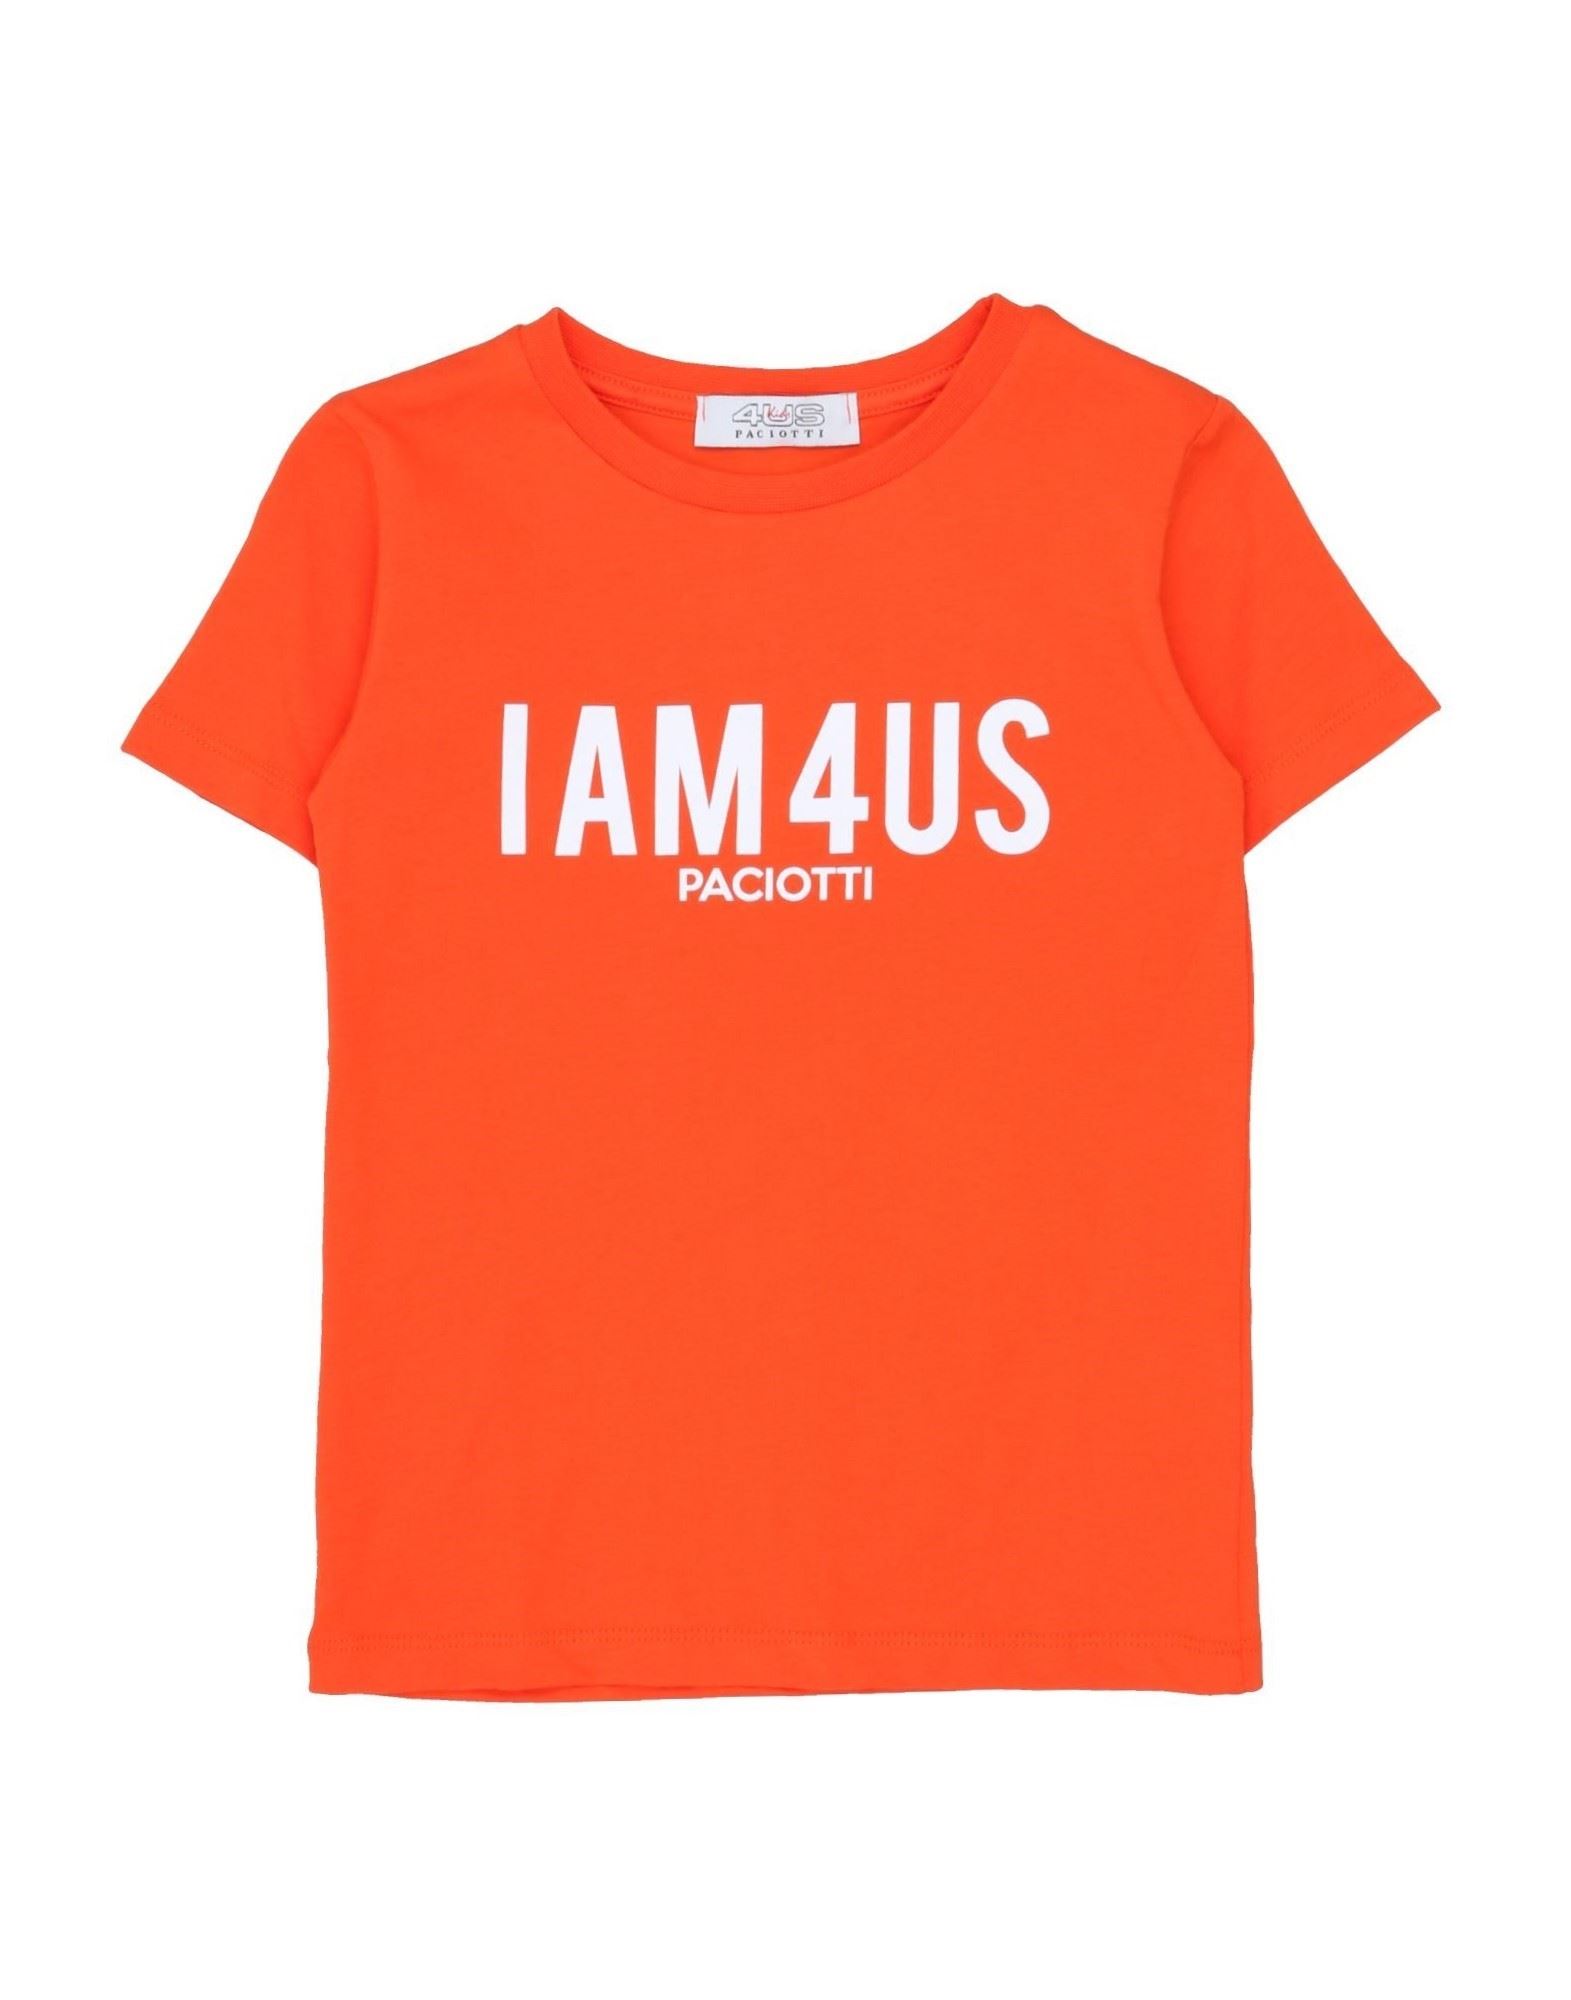 Cesare Paciotti 4us Kids'  T-shirts In Orange